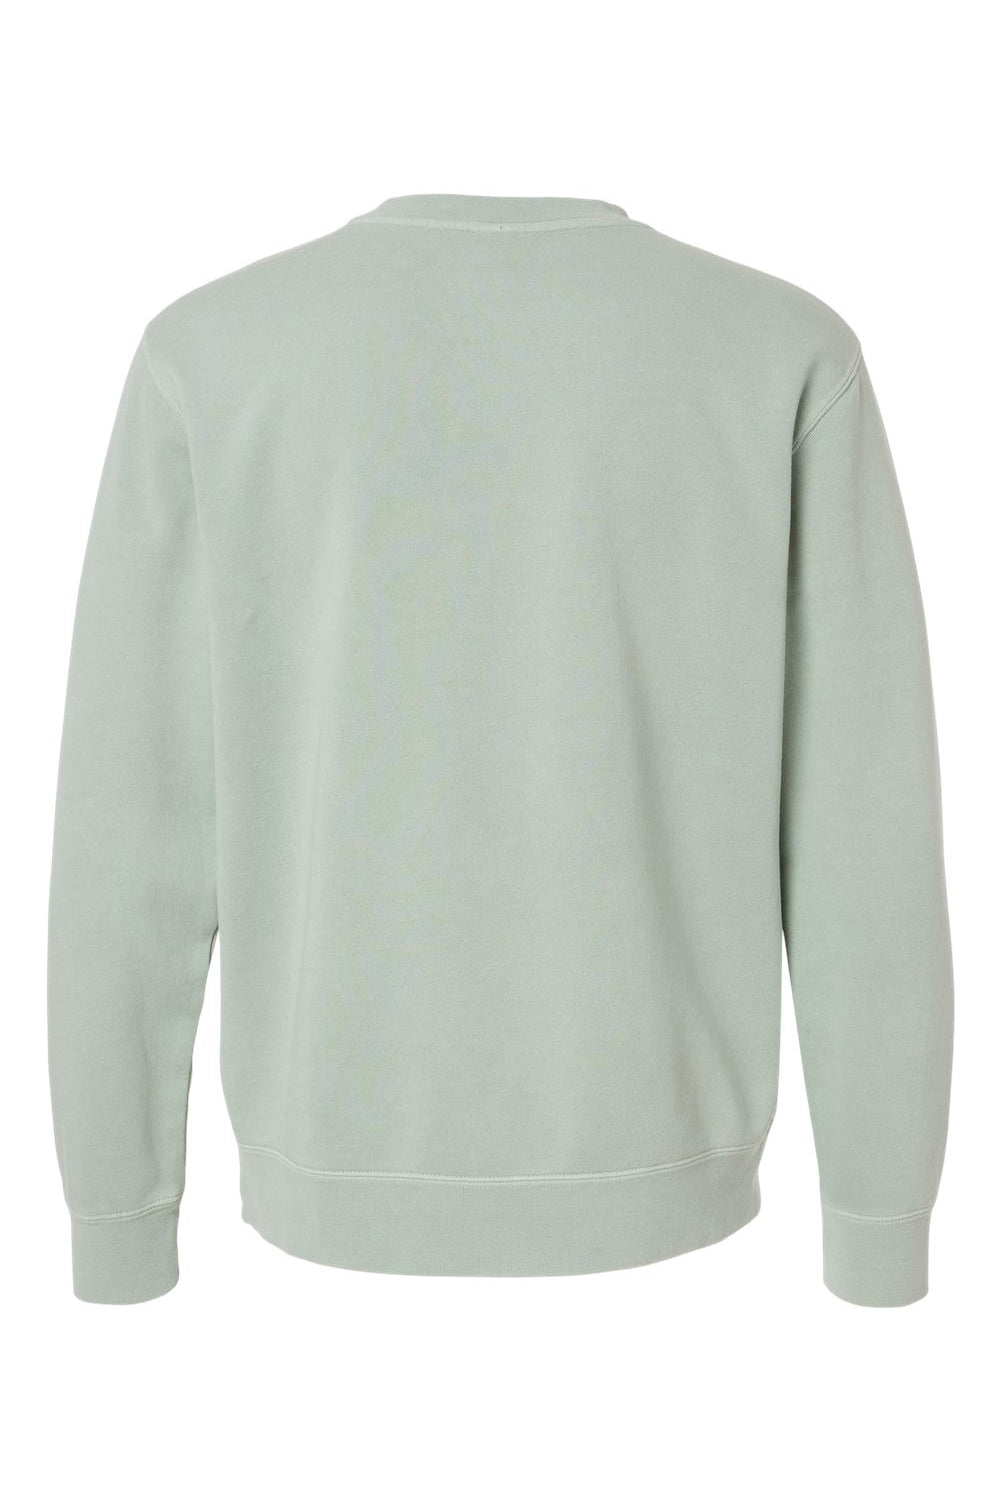 Independent Trading Co. PRM3500 Mens Pigment Dyed Crewneck Sweatshirt Sage Green Flat Back